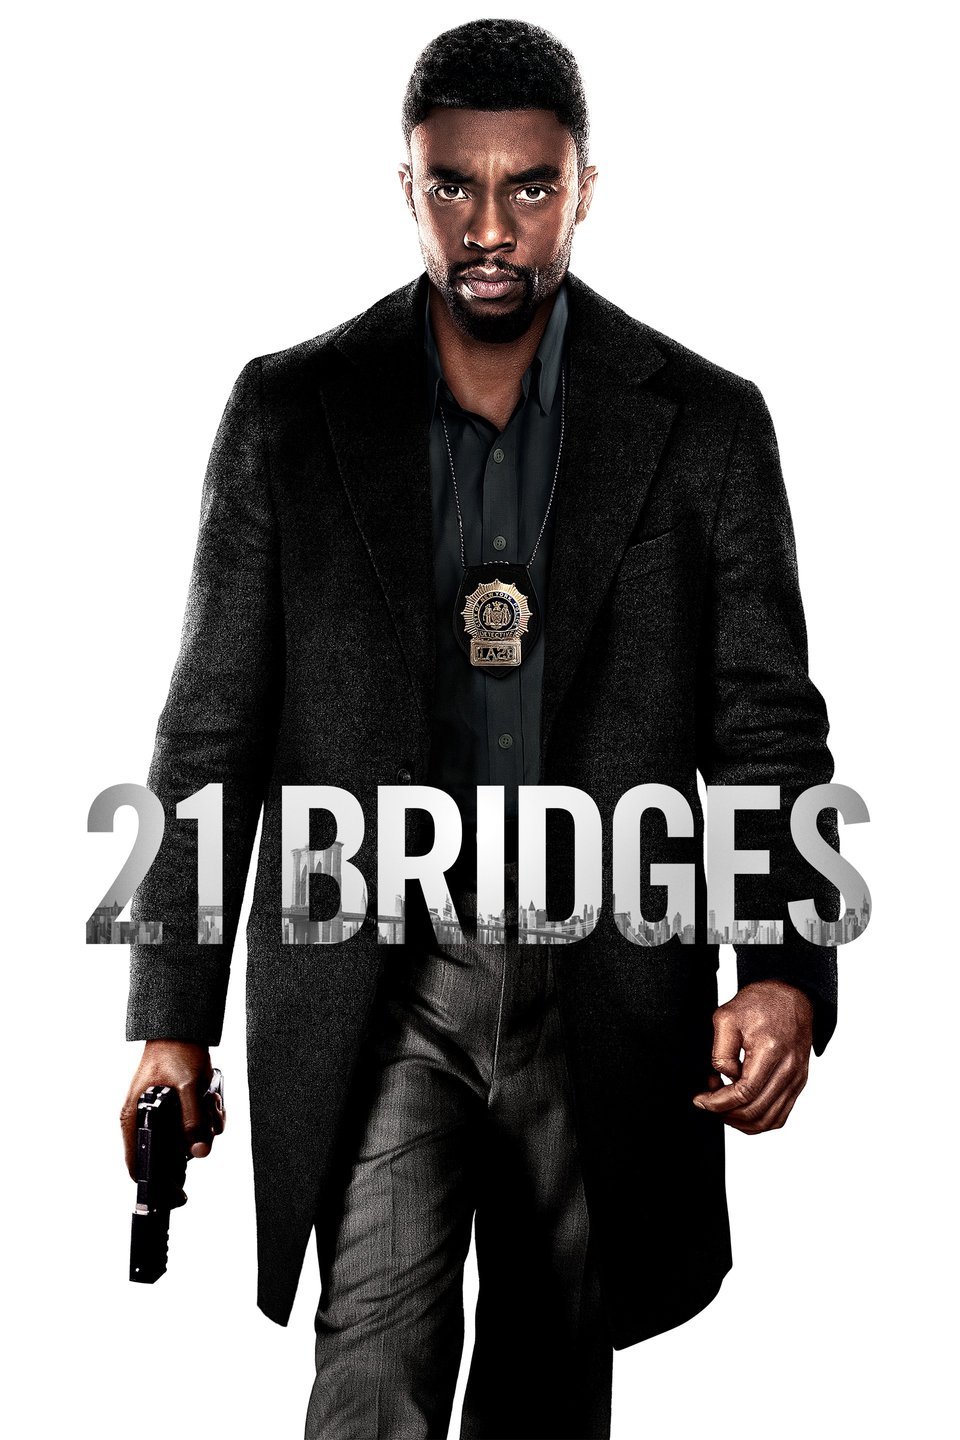 [MINI Super-HQ] 21 Bridges (2019) เผด็จศึกยึดนิวยอร์ก [1080p] [พากย์ไทย 5.1 + เสียงอังกฤษ DTS] [บรรยายไทย + อังกฤษ] [เสียงไทย + ซับไทย] [PANDAFILE]